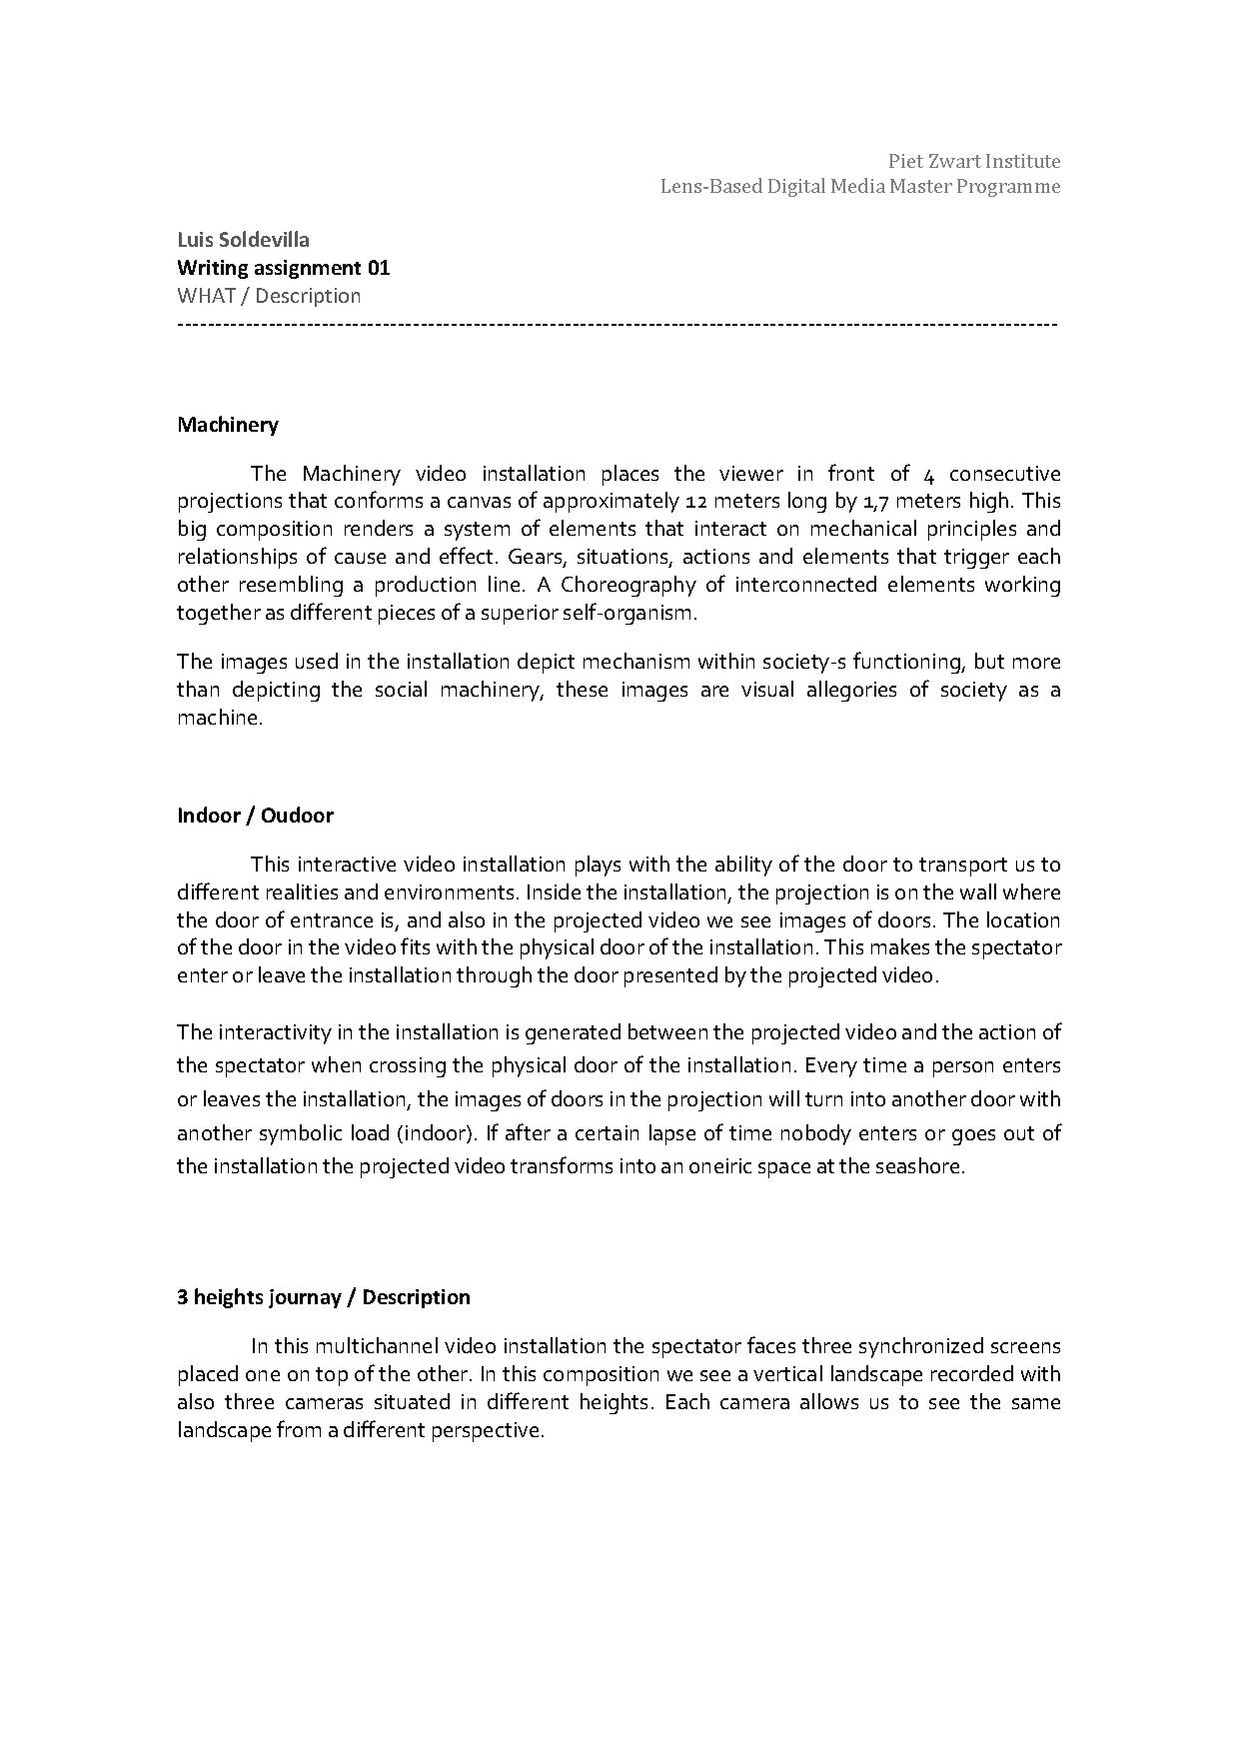 LS Writing assingment 01.pdf